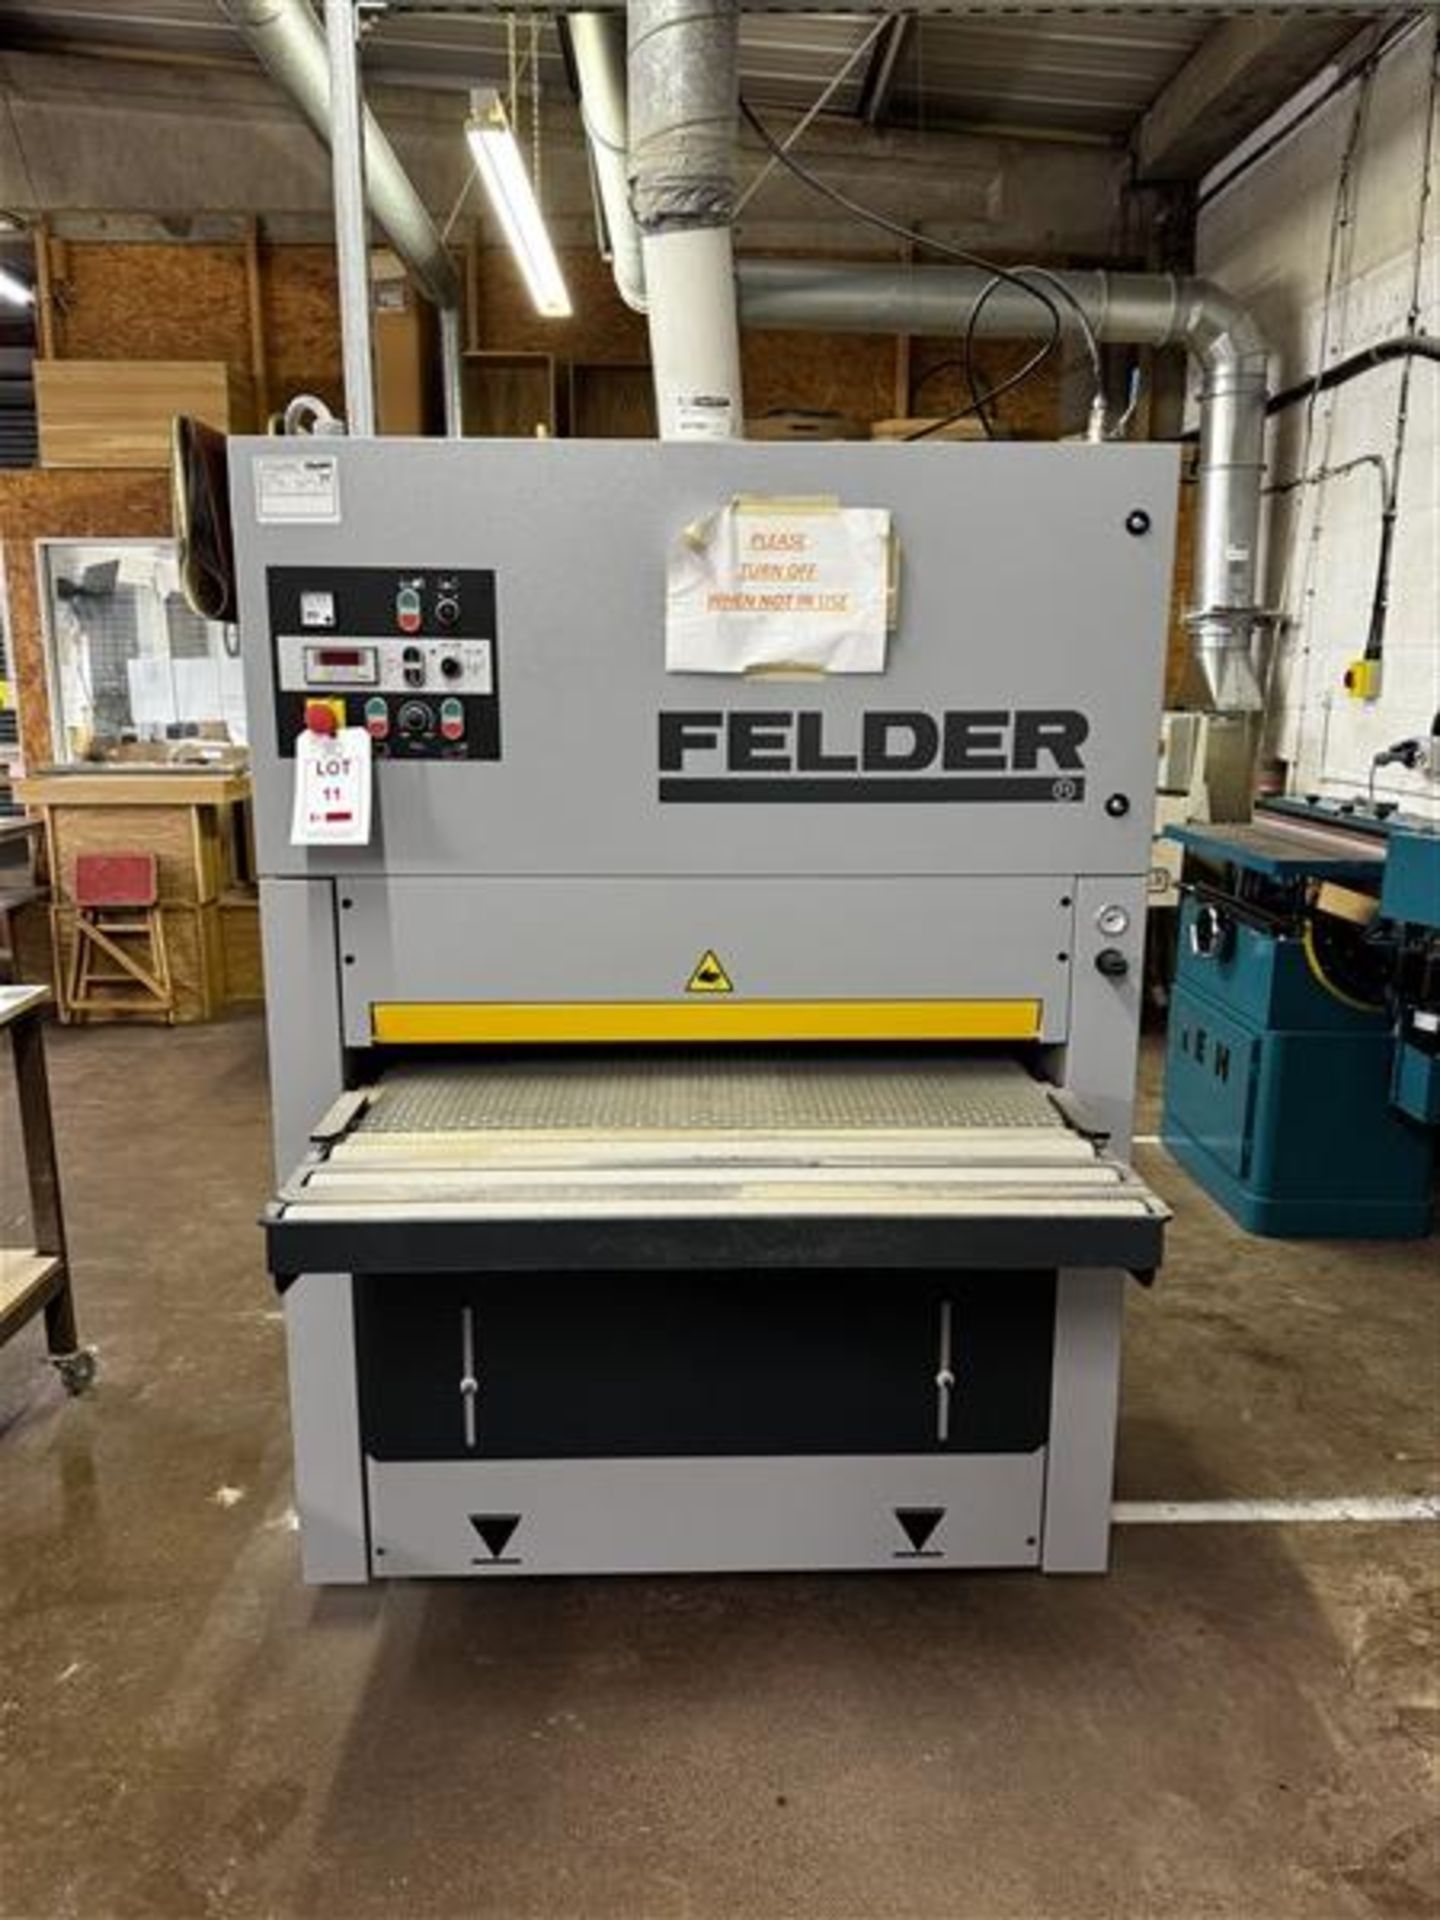 Felder 950mm wide belt sander (2016), type FW950C, serial no. 24.10.014.16 (Please note this lot